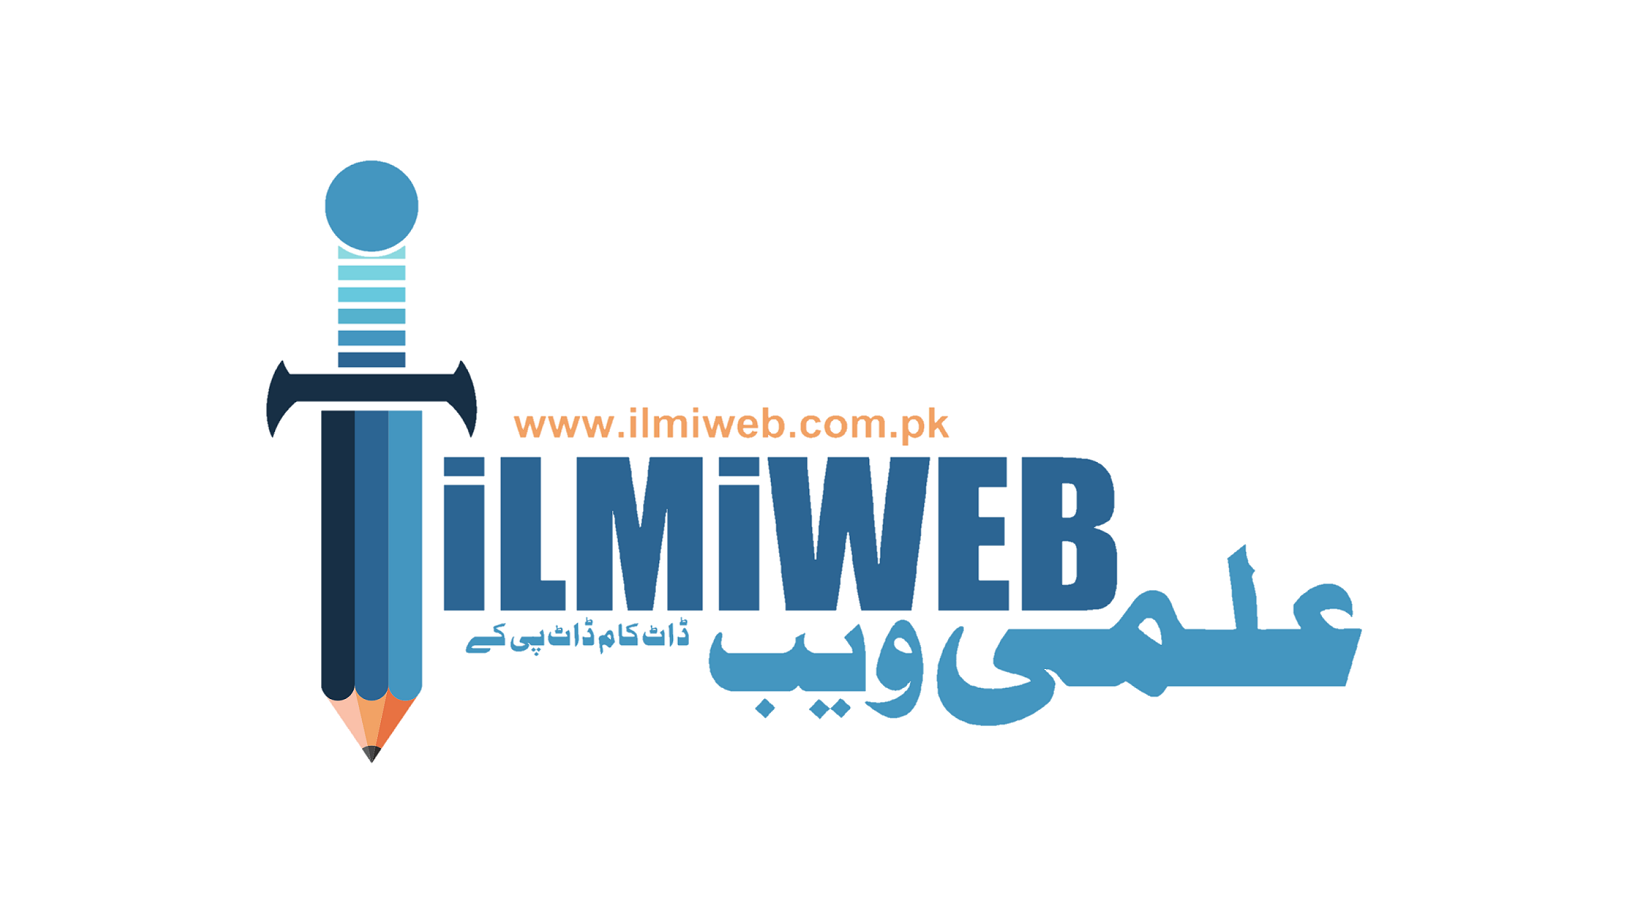 Ilmiweb.com.pk - Founded by Qasim Tariq